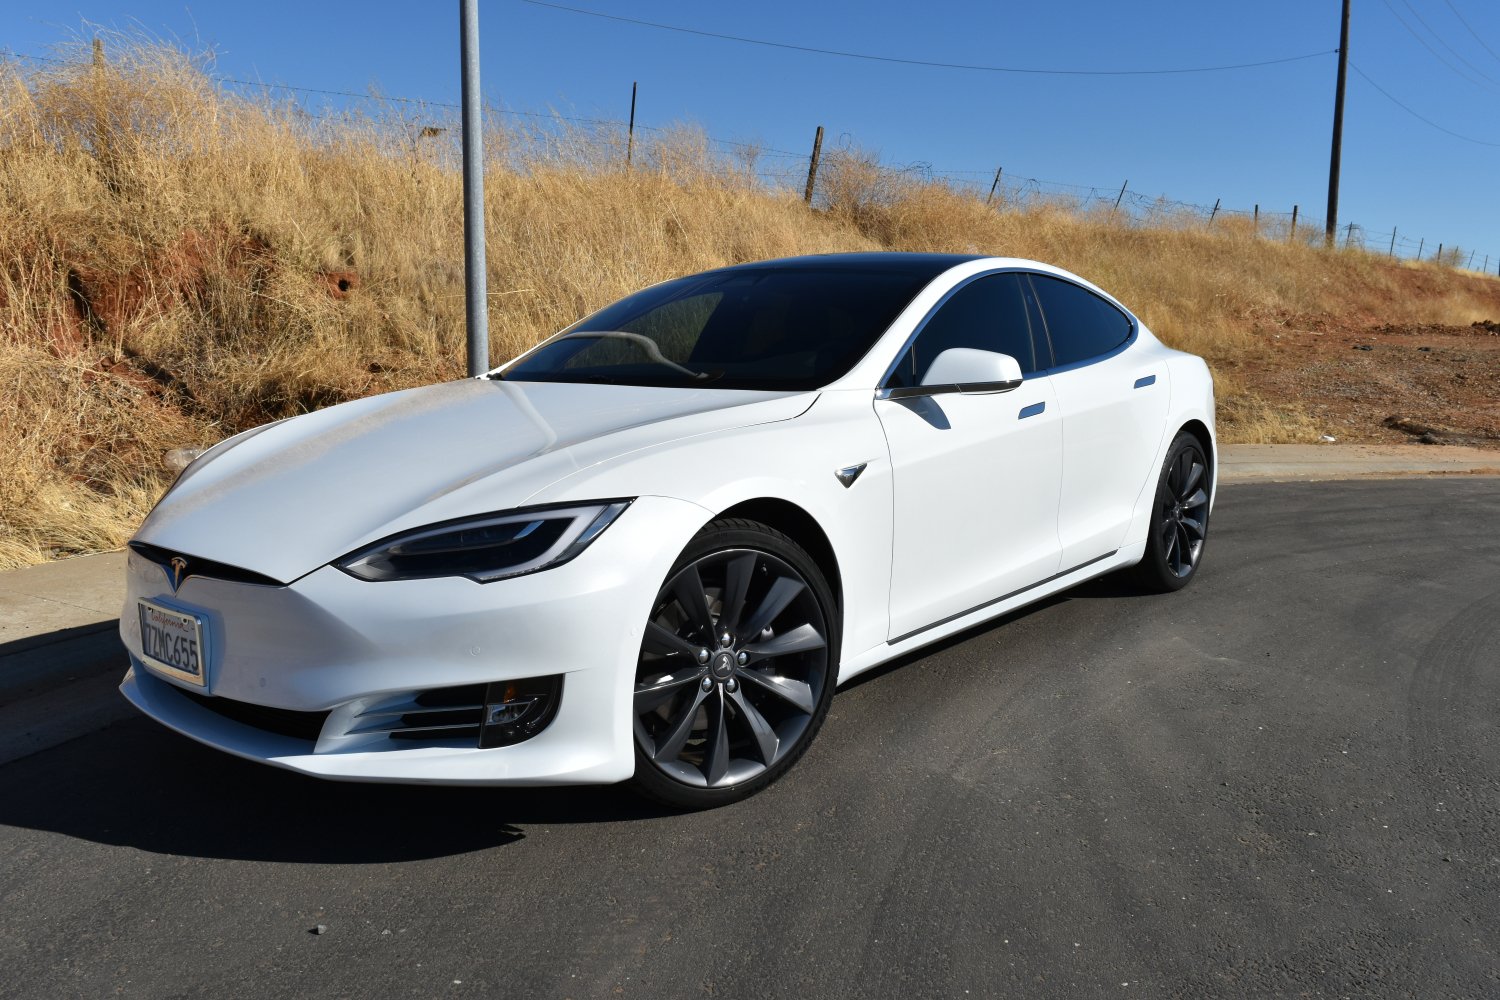 Not Available - Mint White 2017 Tesla Model S w/Reus Sound System! | Tesla Motors Club